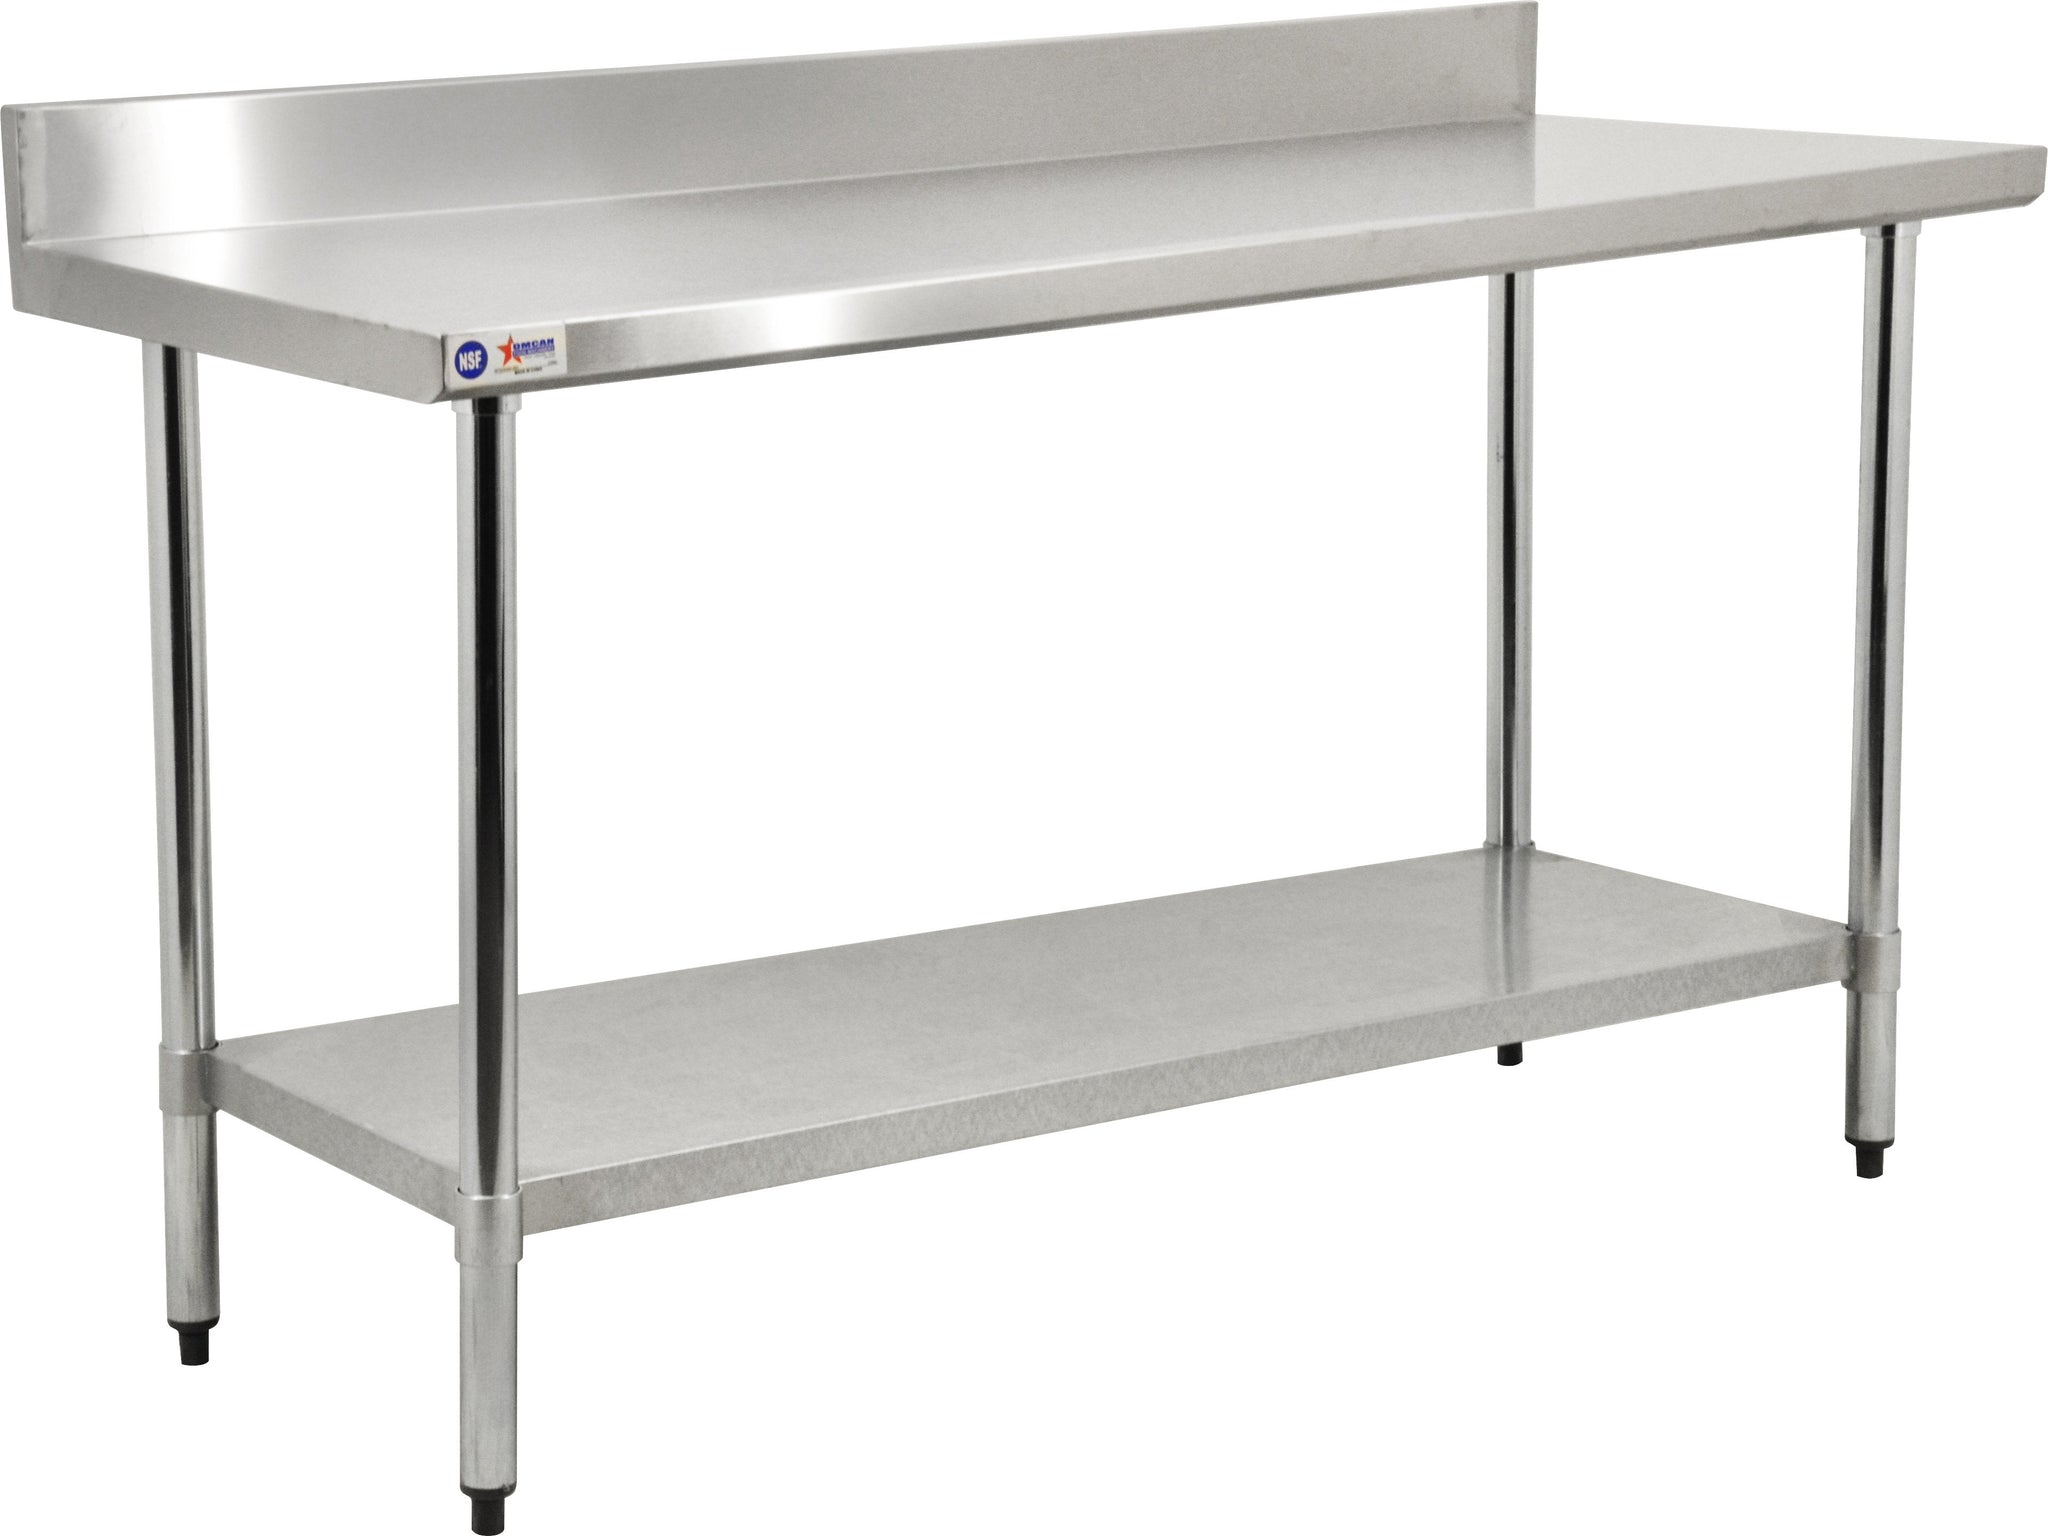 Omcan - 30” x 48” Standard Work Table with Backsplash - 22088